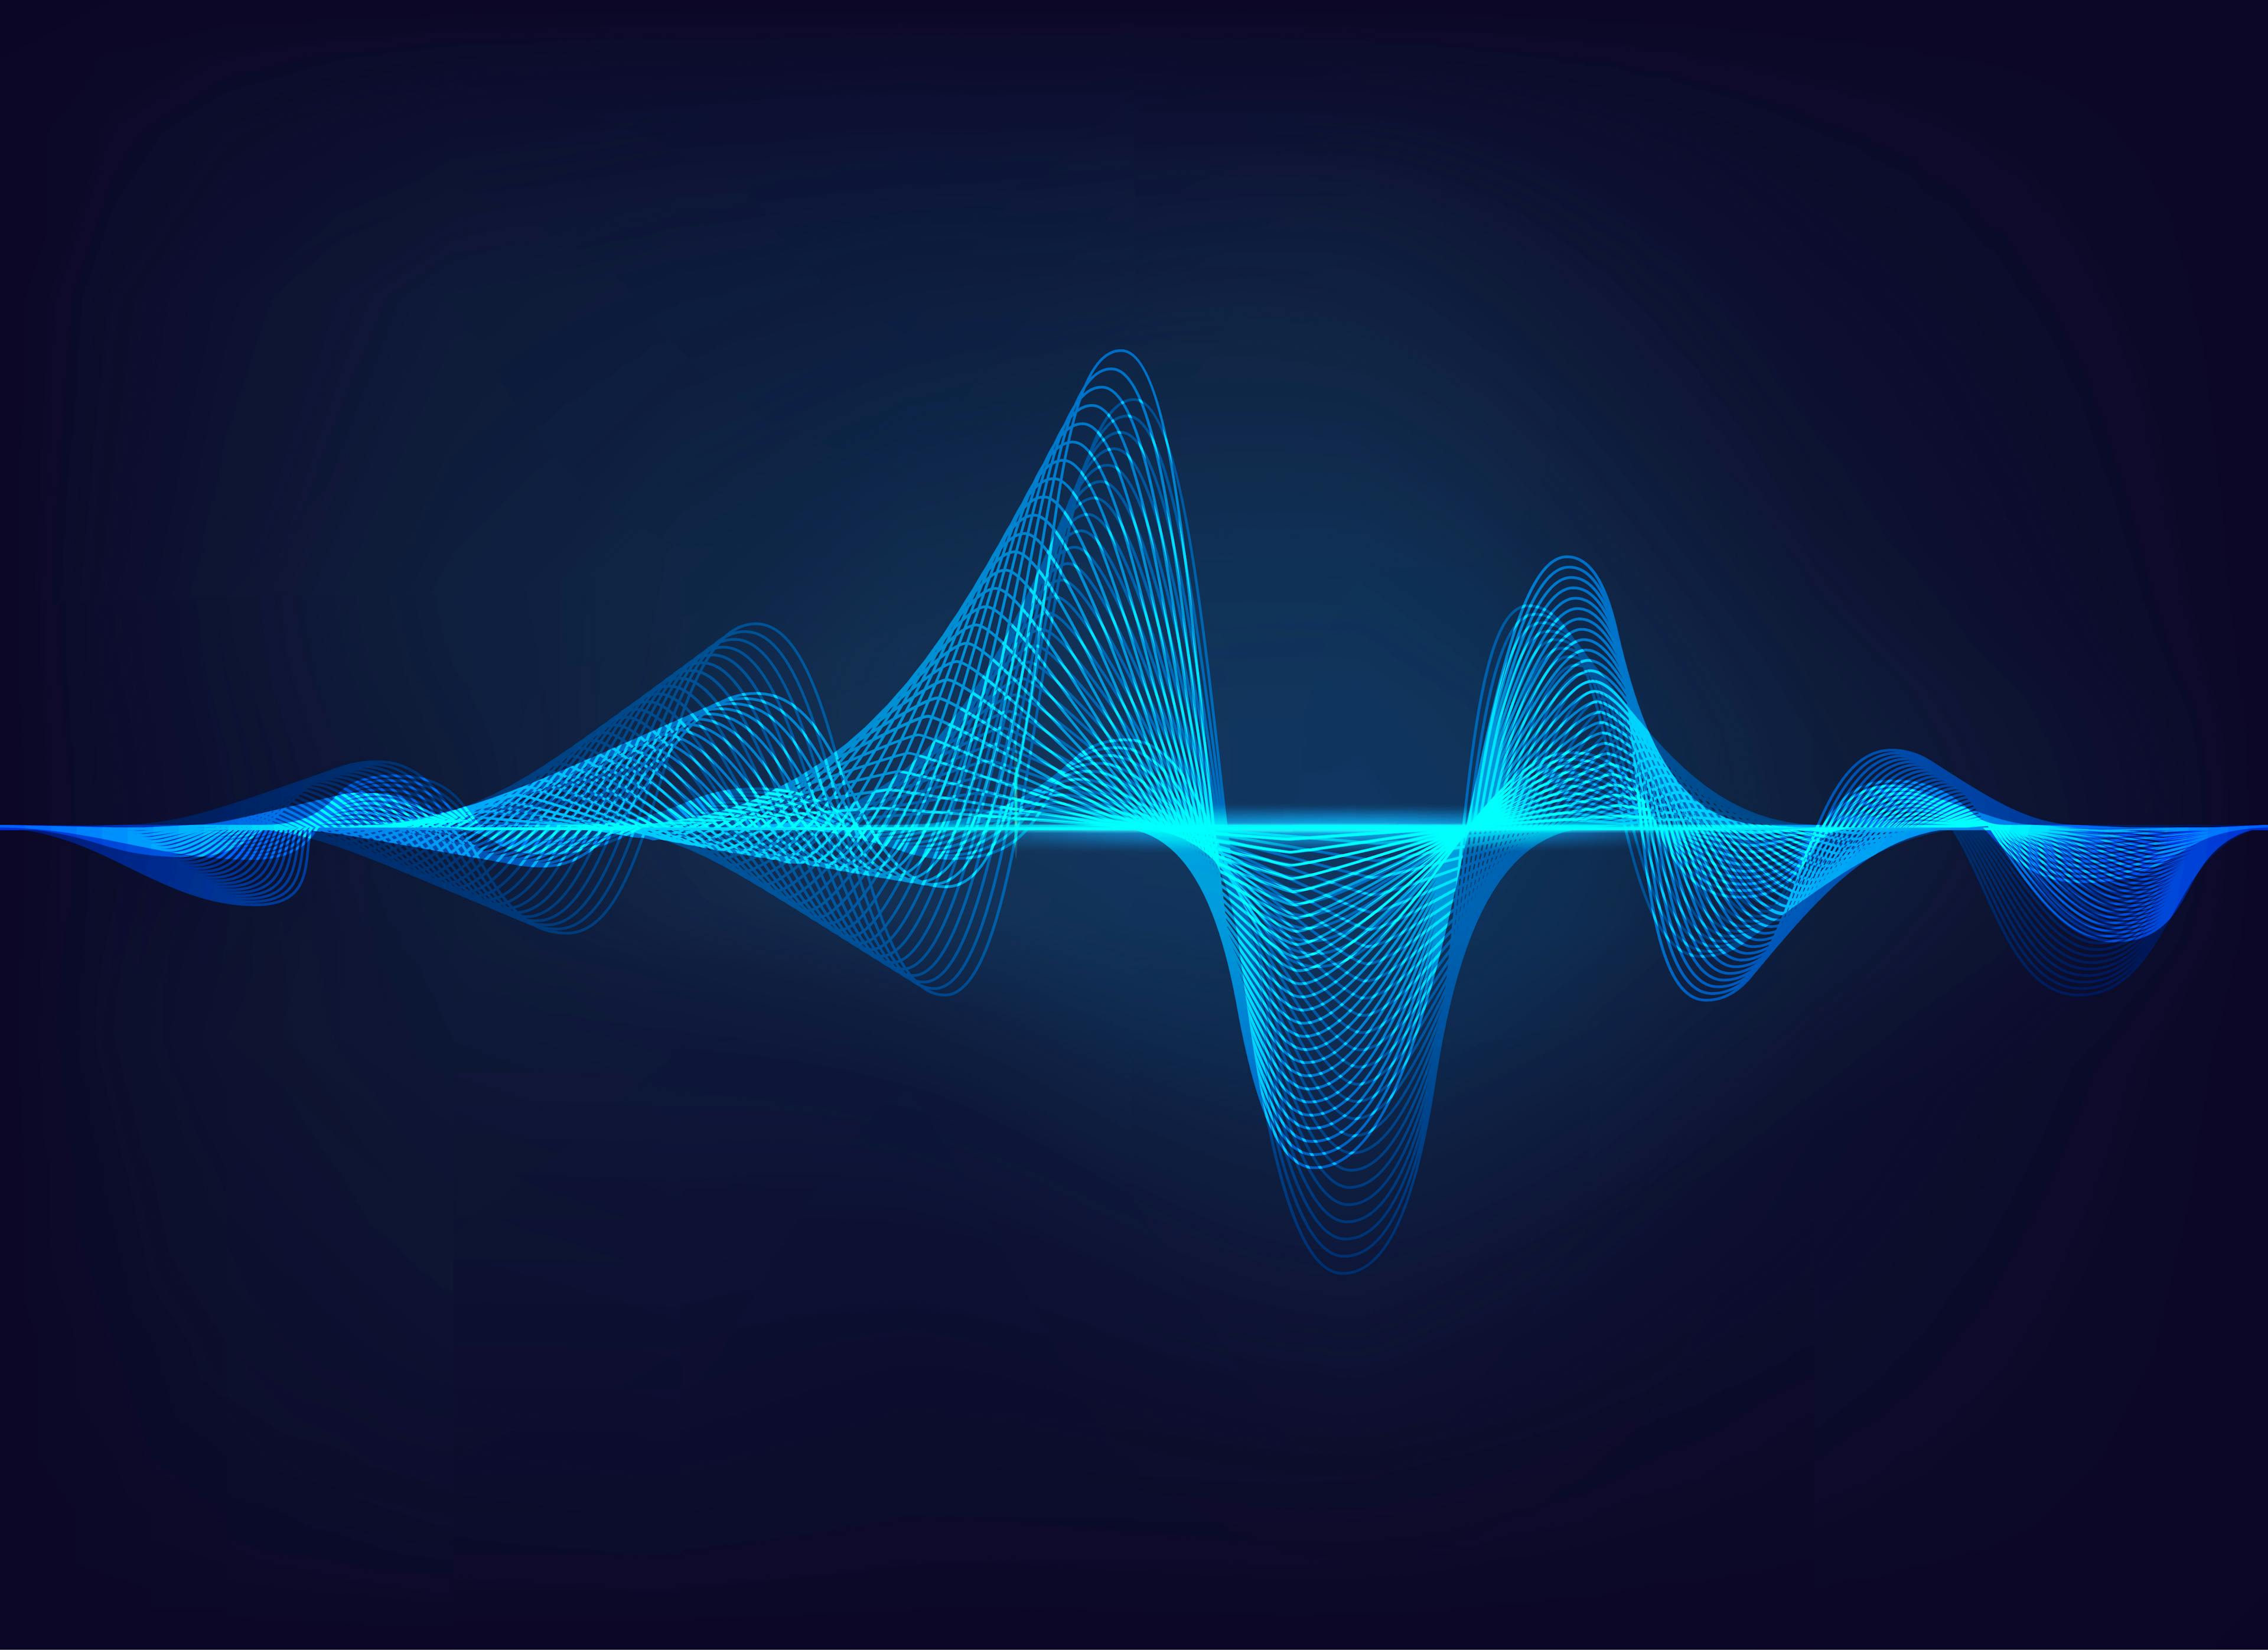 Sound Waves for Cancer